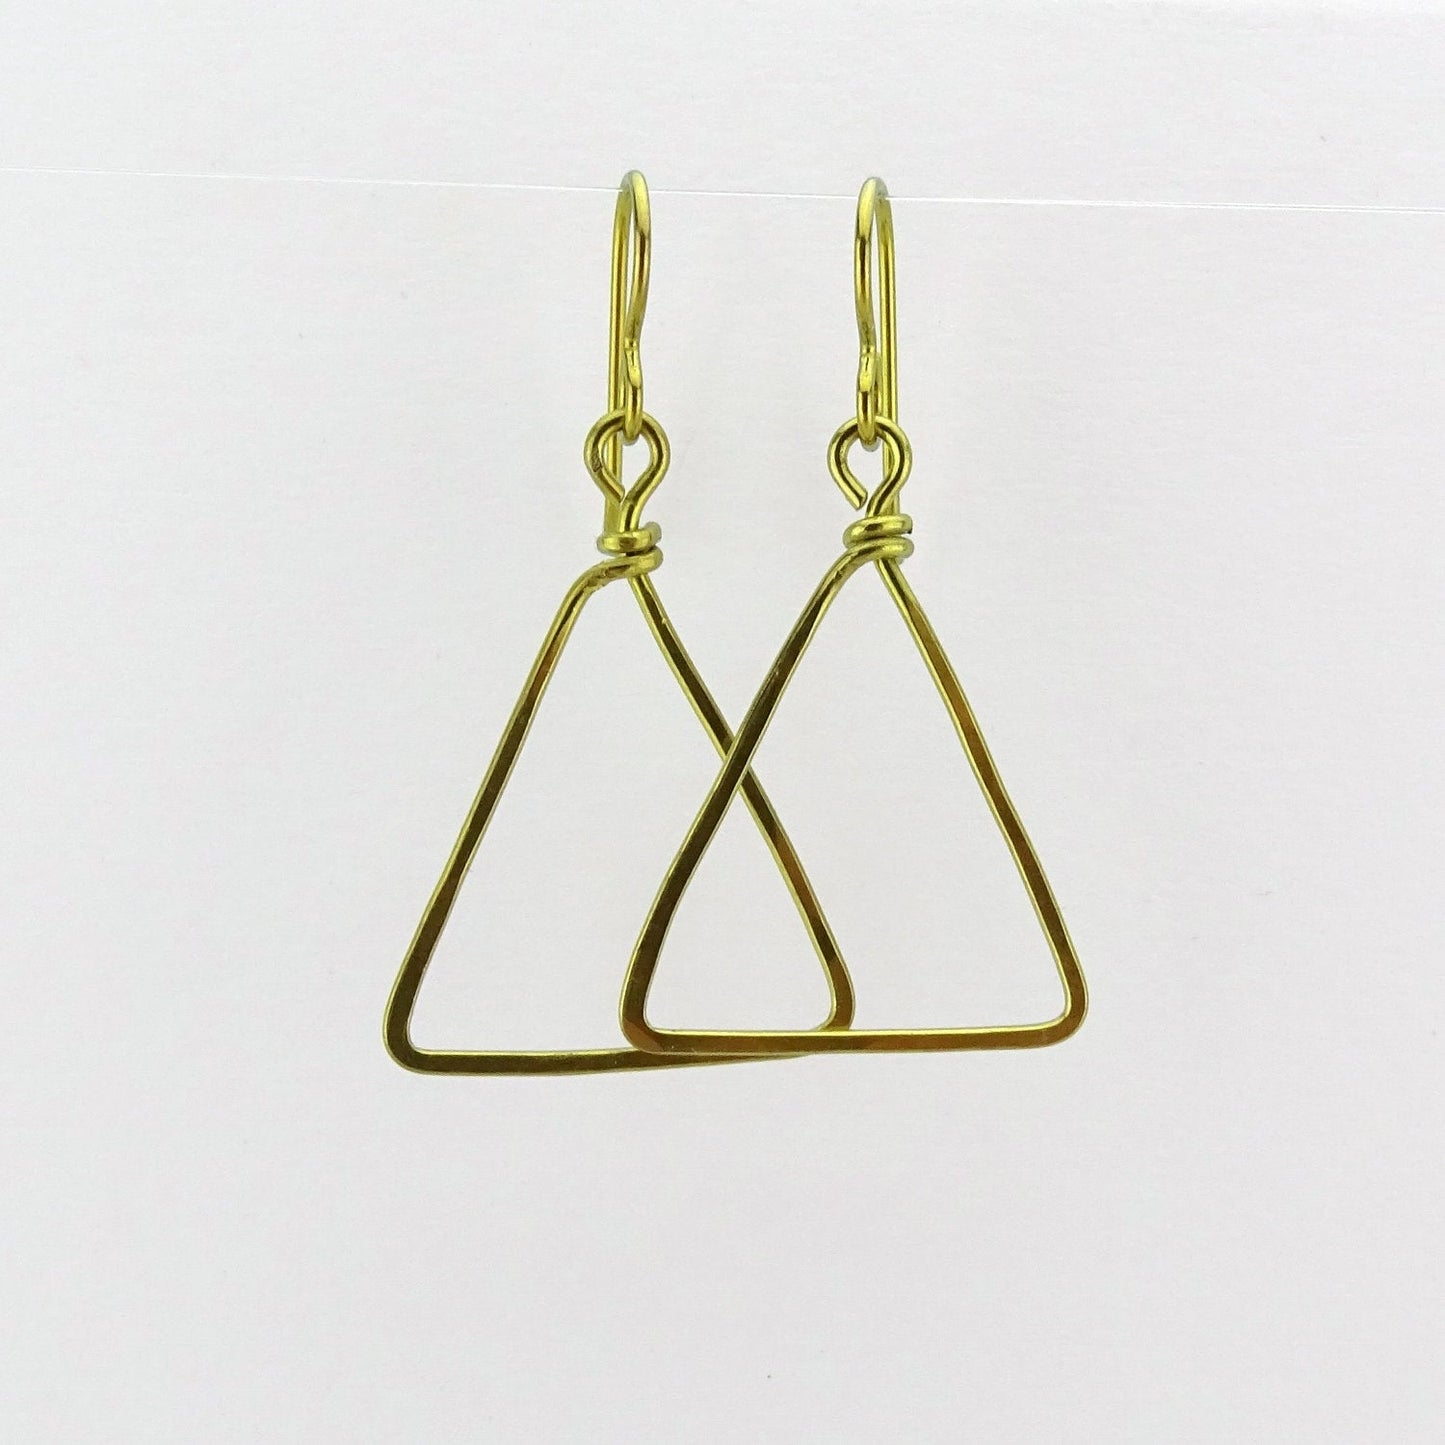 Gold Niobium Triangle Earrings, Geometric Hammered Hypoallergenic Earrings for Sensitive Ears, Yellow Gold color Niobium Nickel Free Earings